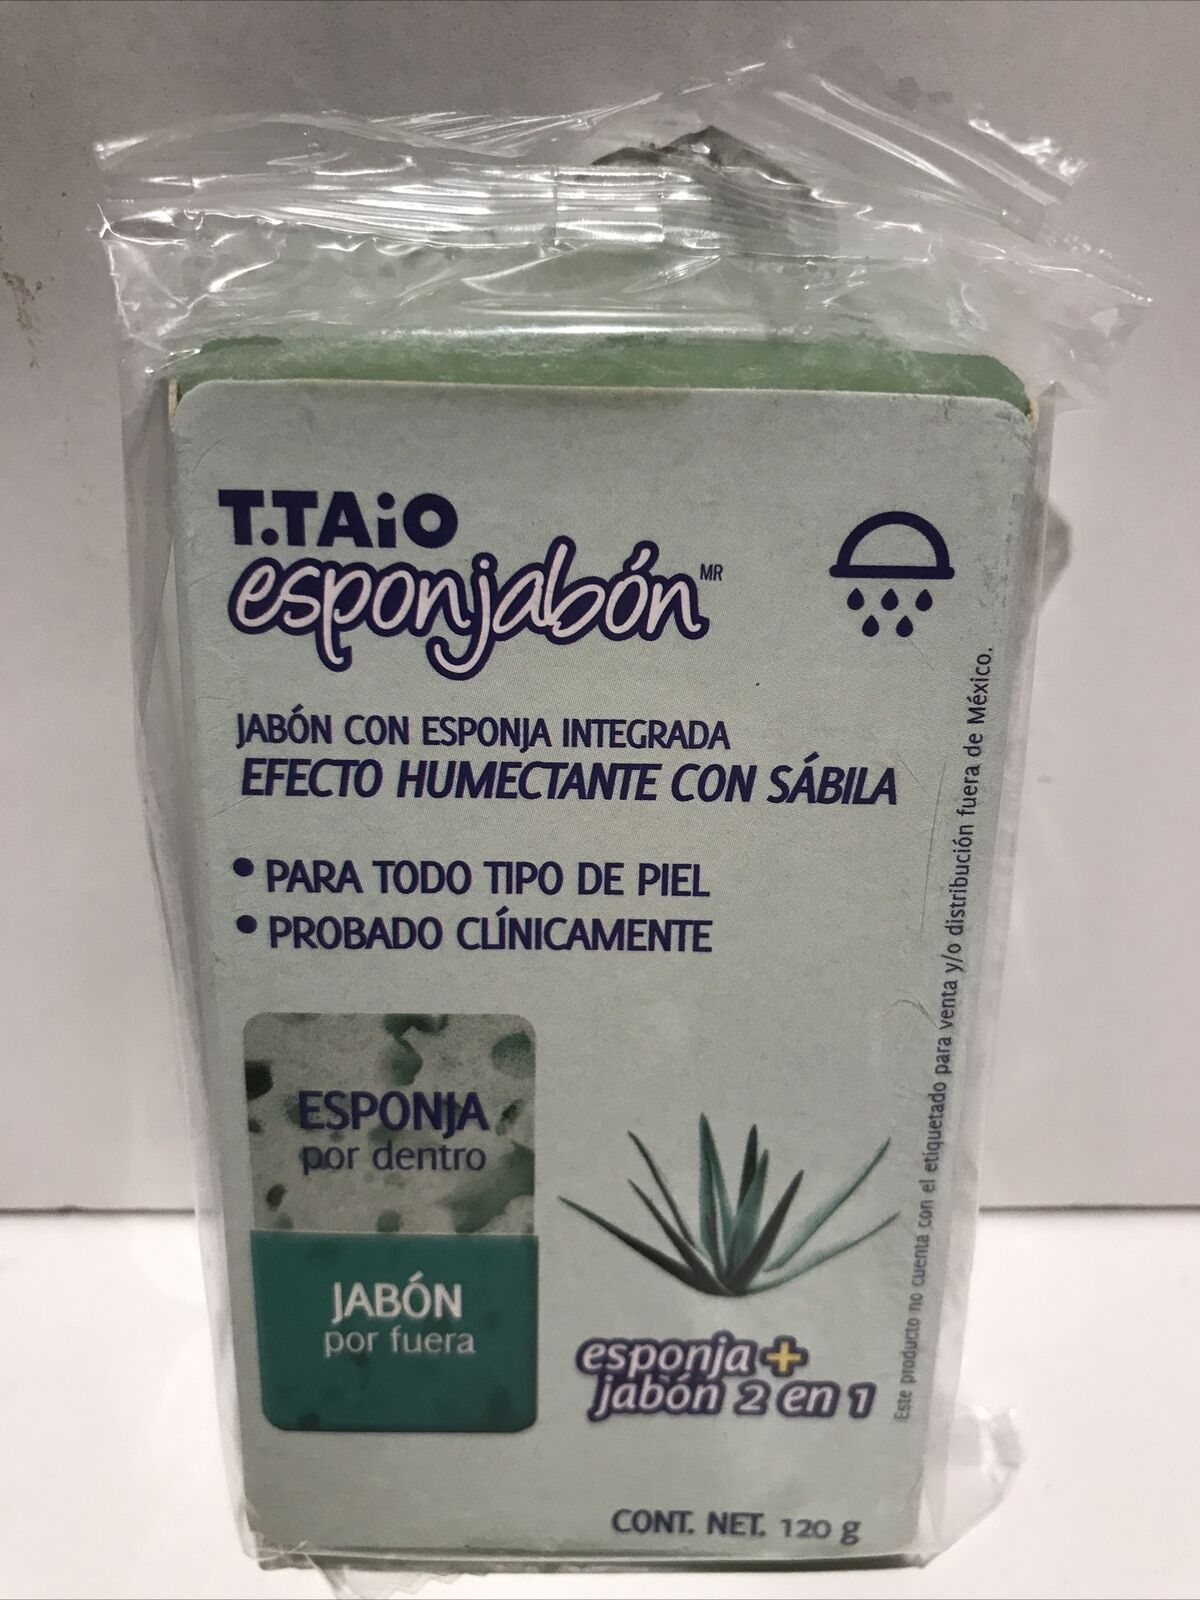 2-Pk T.TAiO Moisturizing Aloe Sponge Soap / T.TAiO Esponjabon Humectante Savila